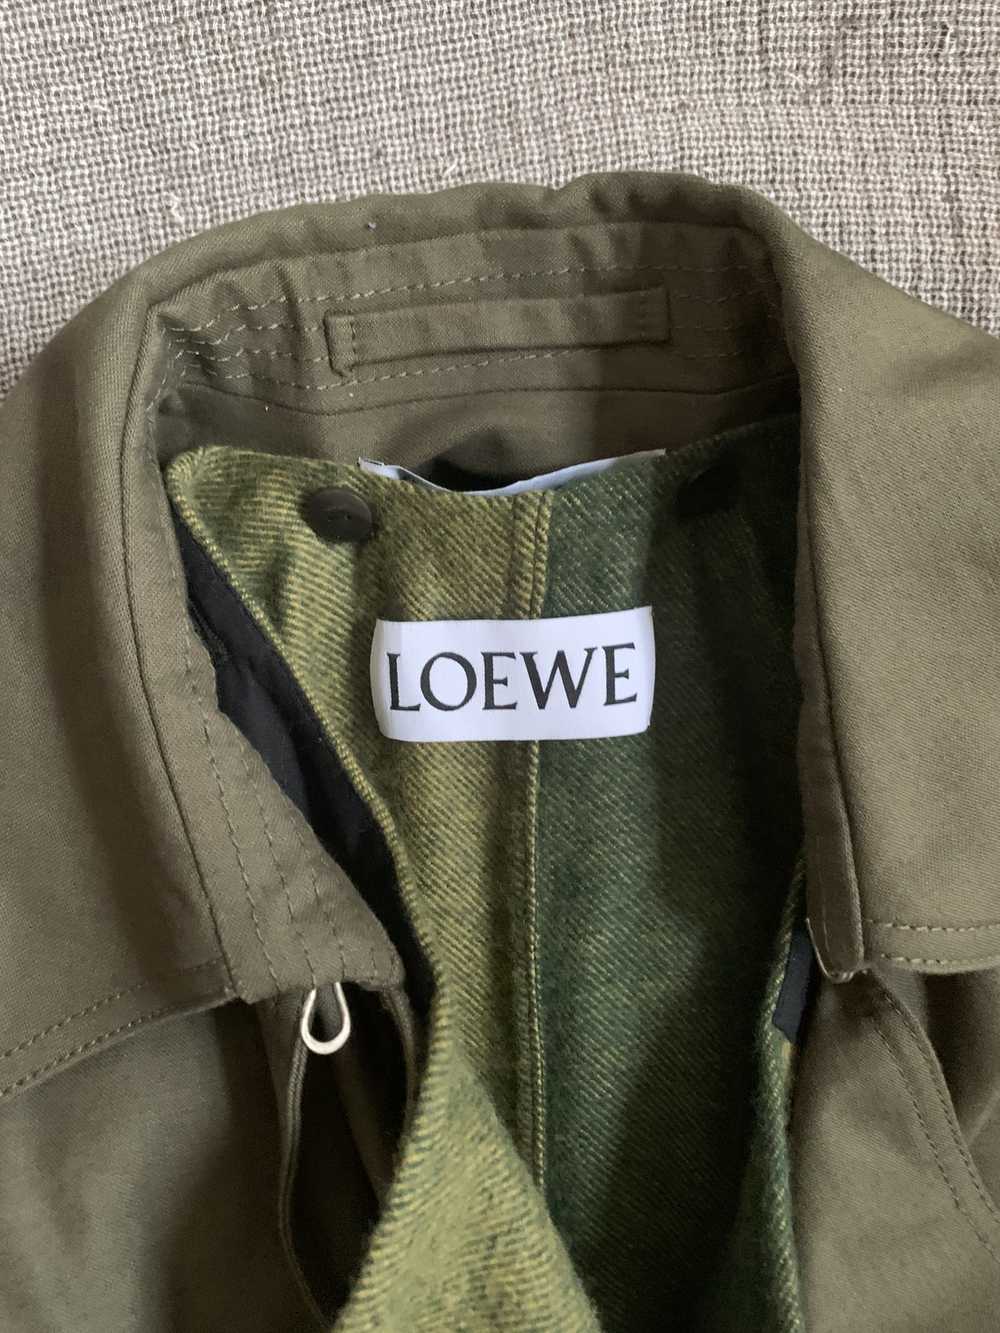 Loewe Loewe Blanket Trench Coat - image 6